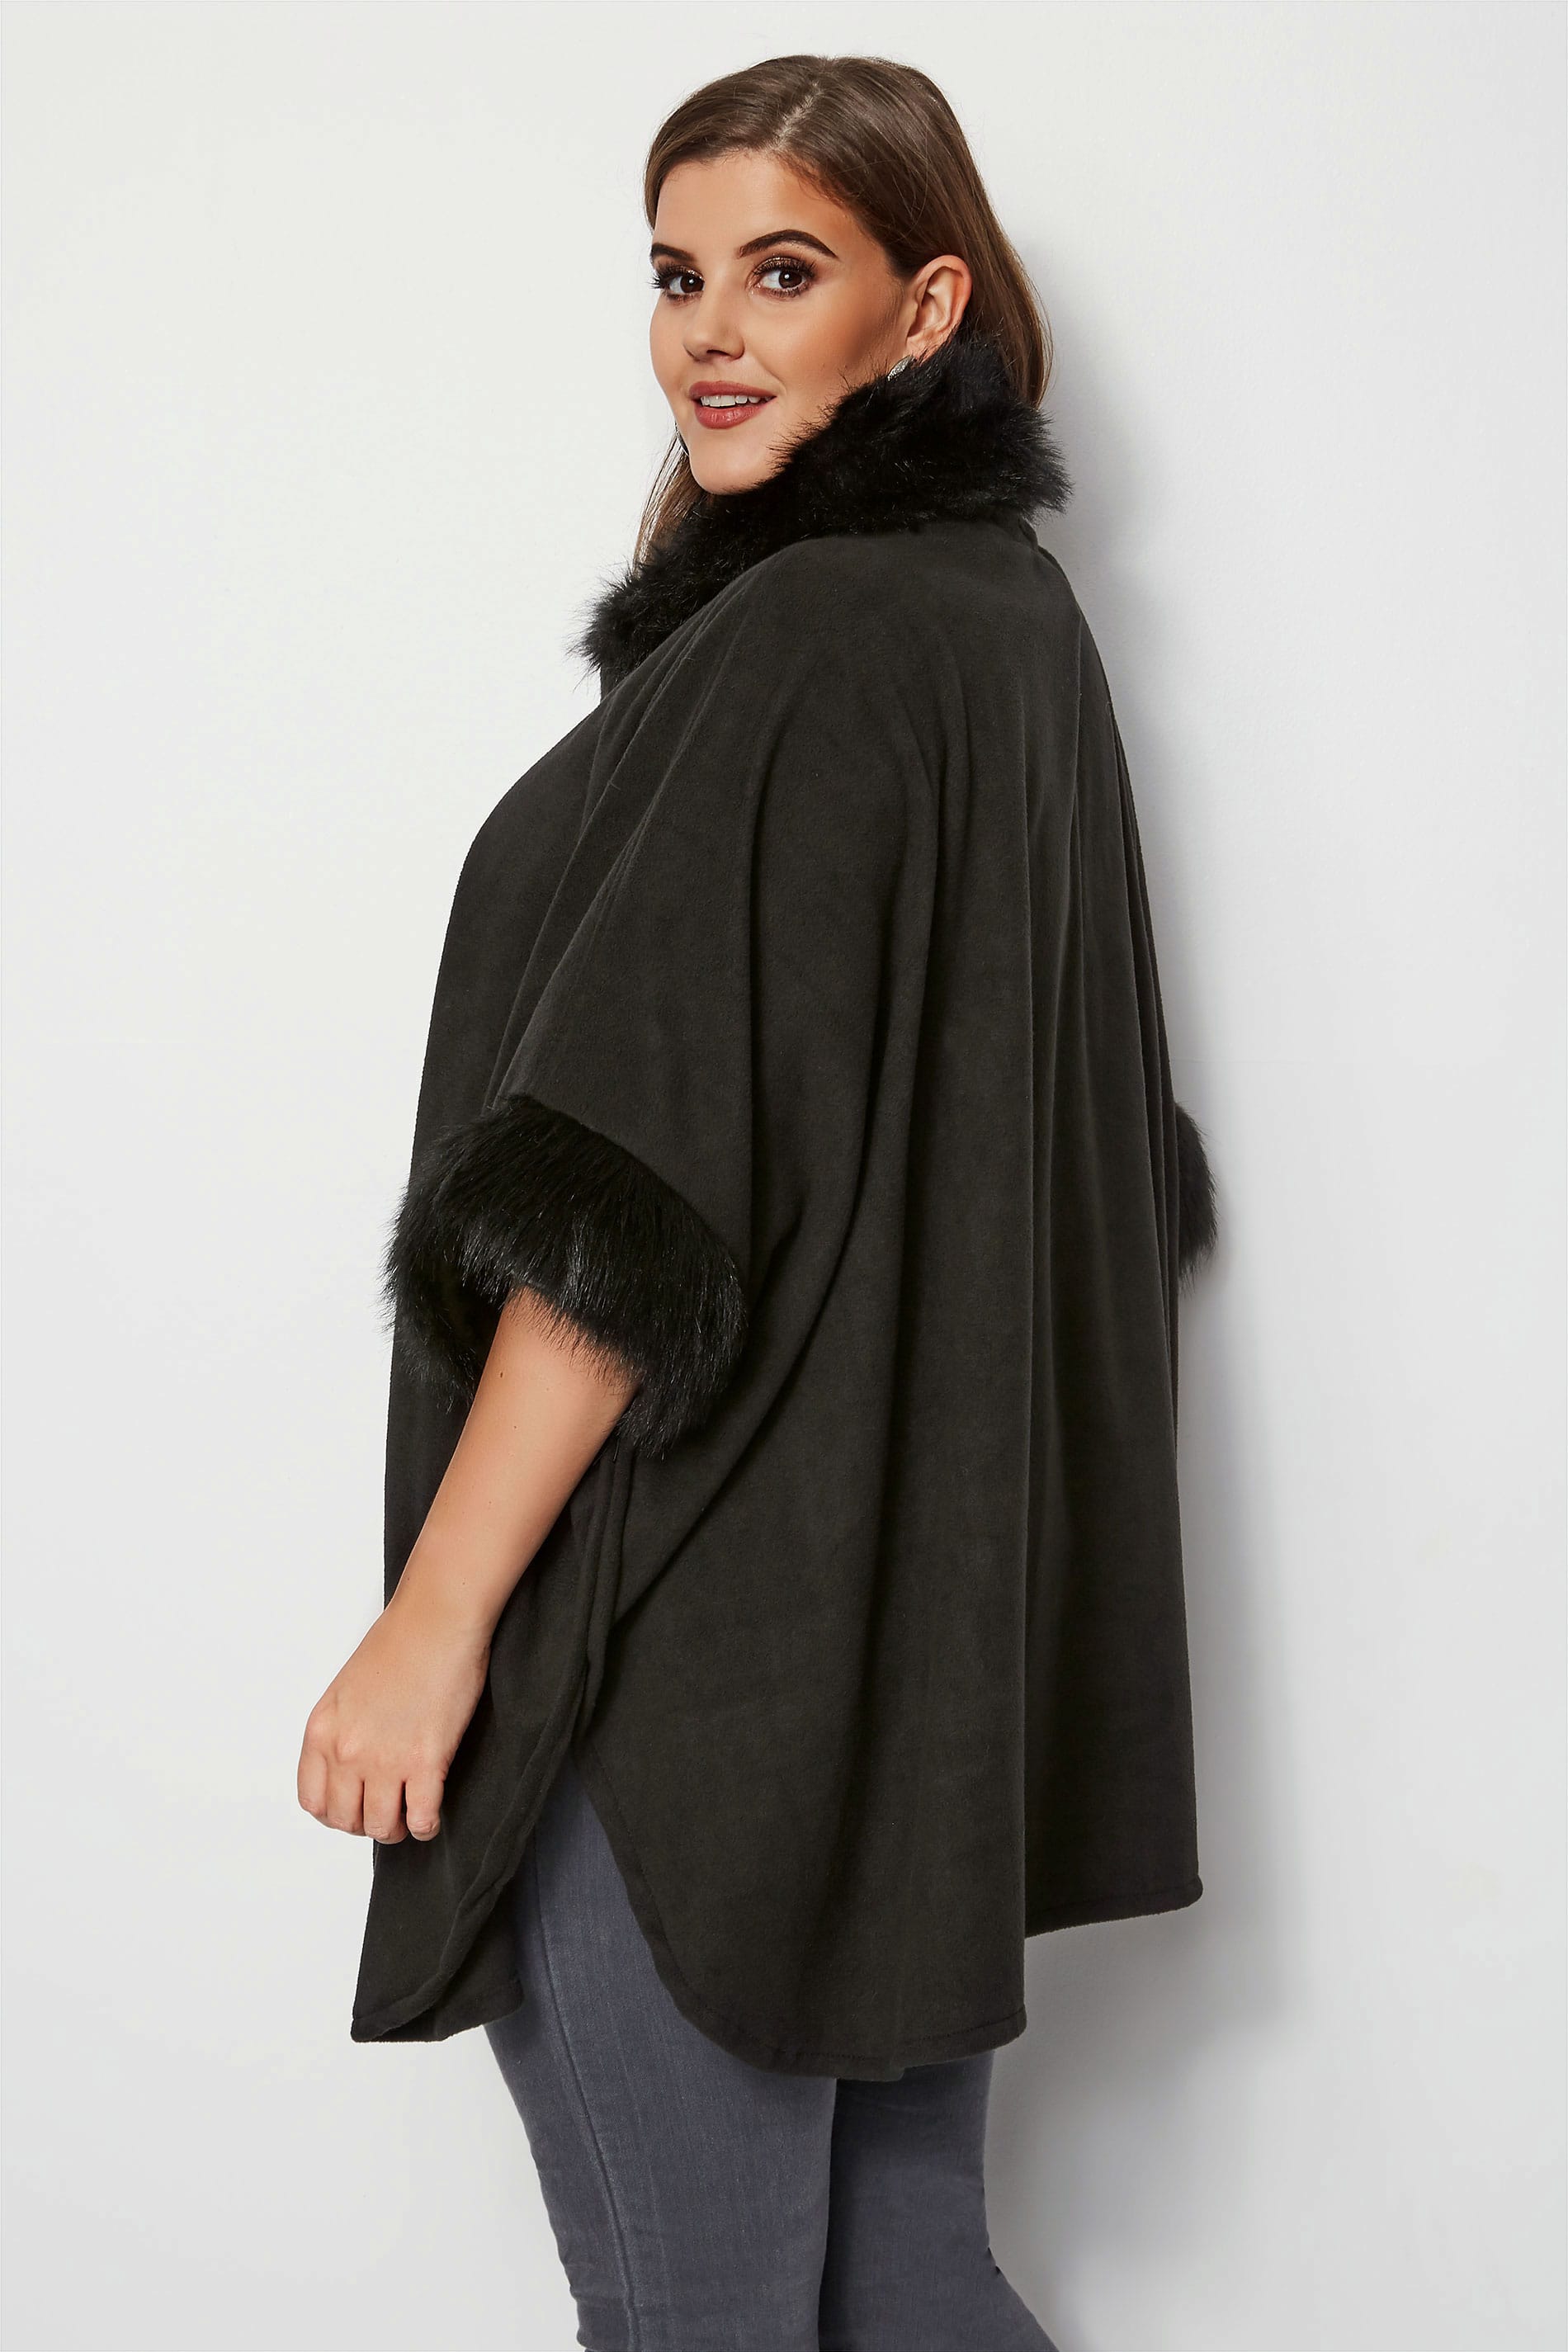 Black Fleece Wrap With Faux Fur Trim, plus size 16 to 32